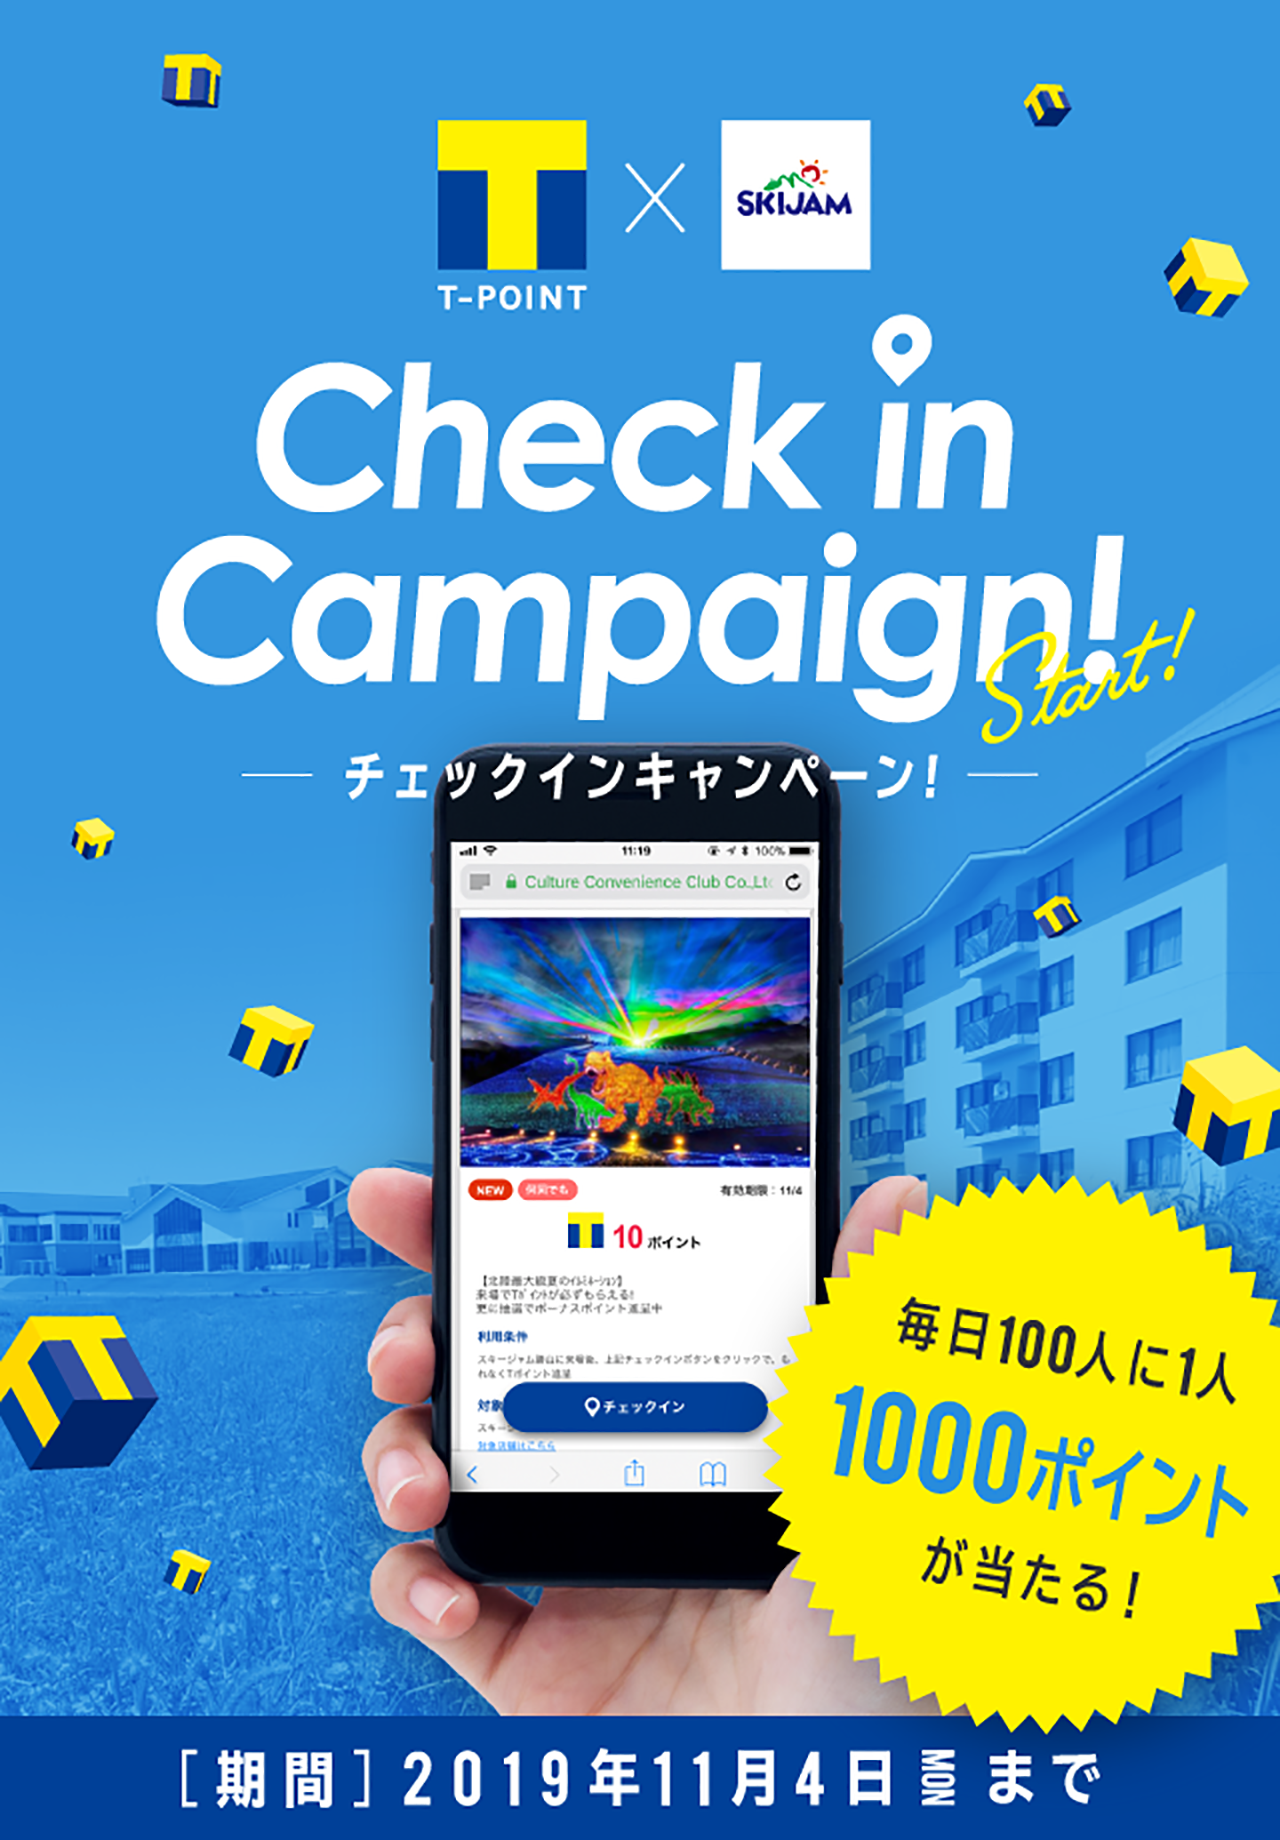 Check in Campaign！Start！チェックインキャンペーン！［期間］2019年11月4日 MONまで！